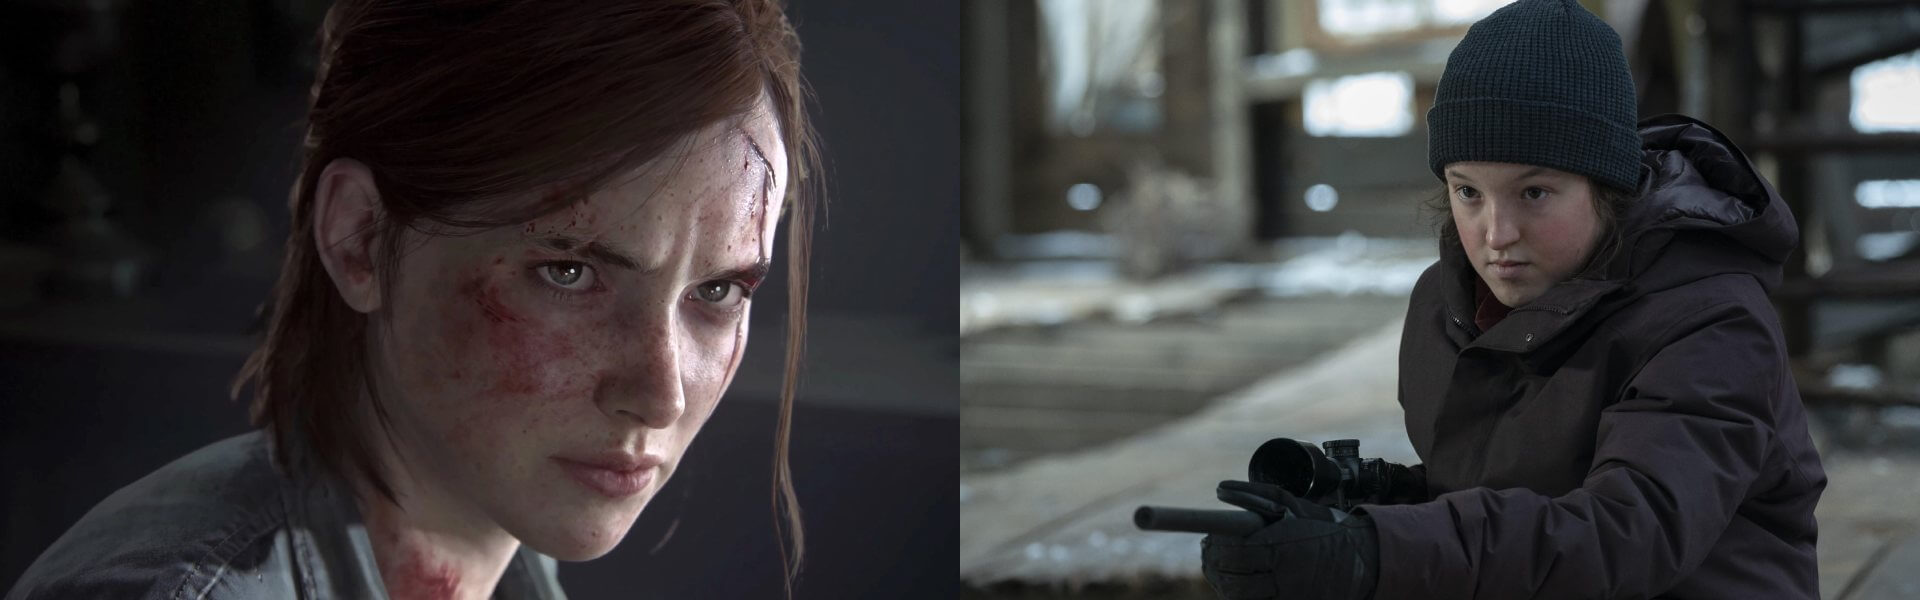 The Last of Us: Ellie en videojuego y serie de HBO